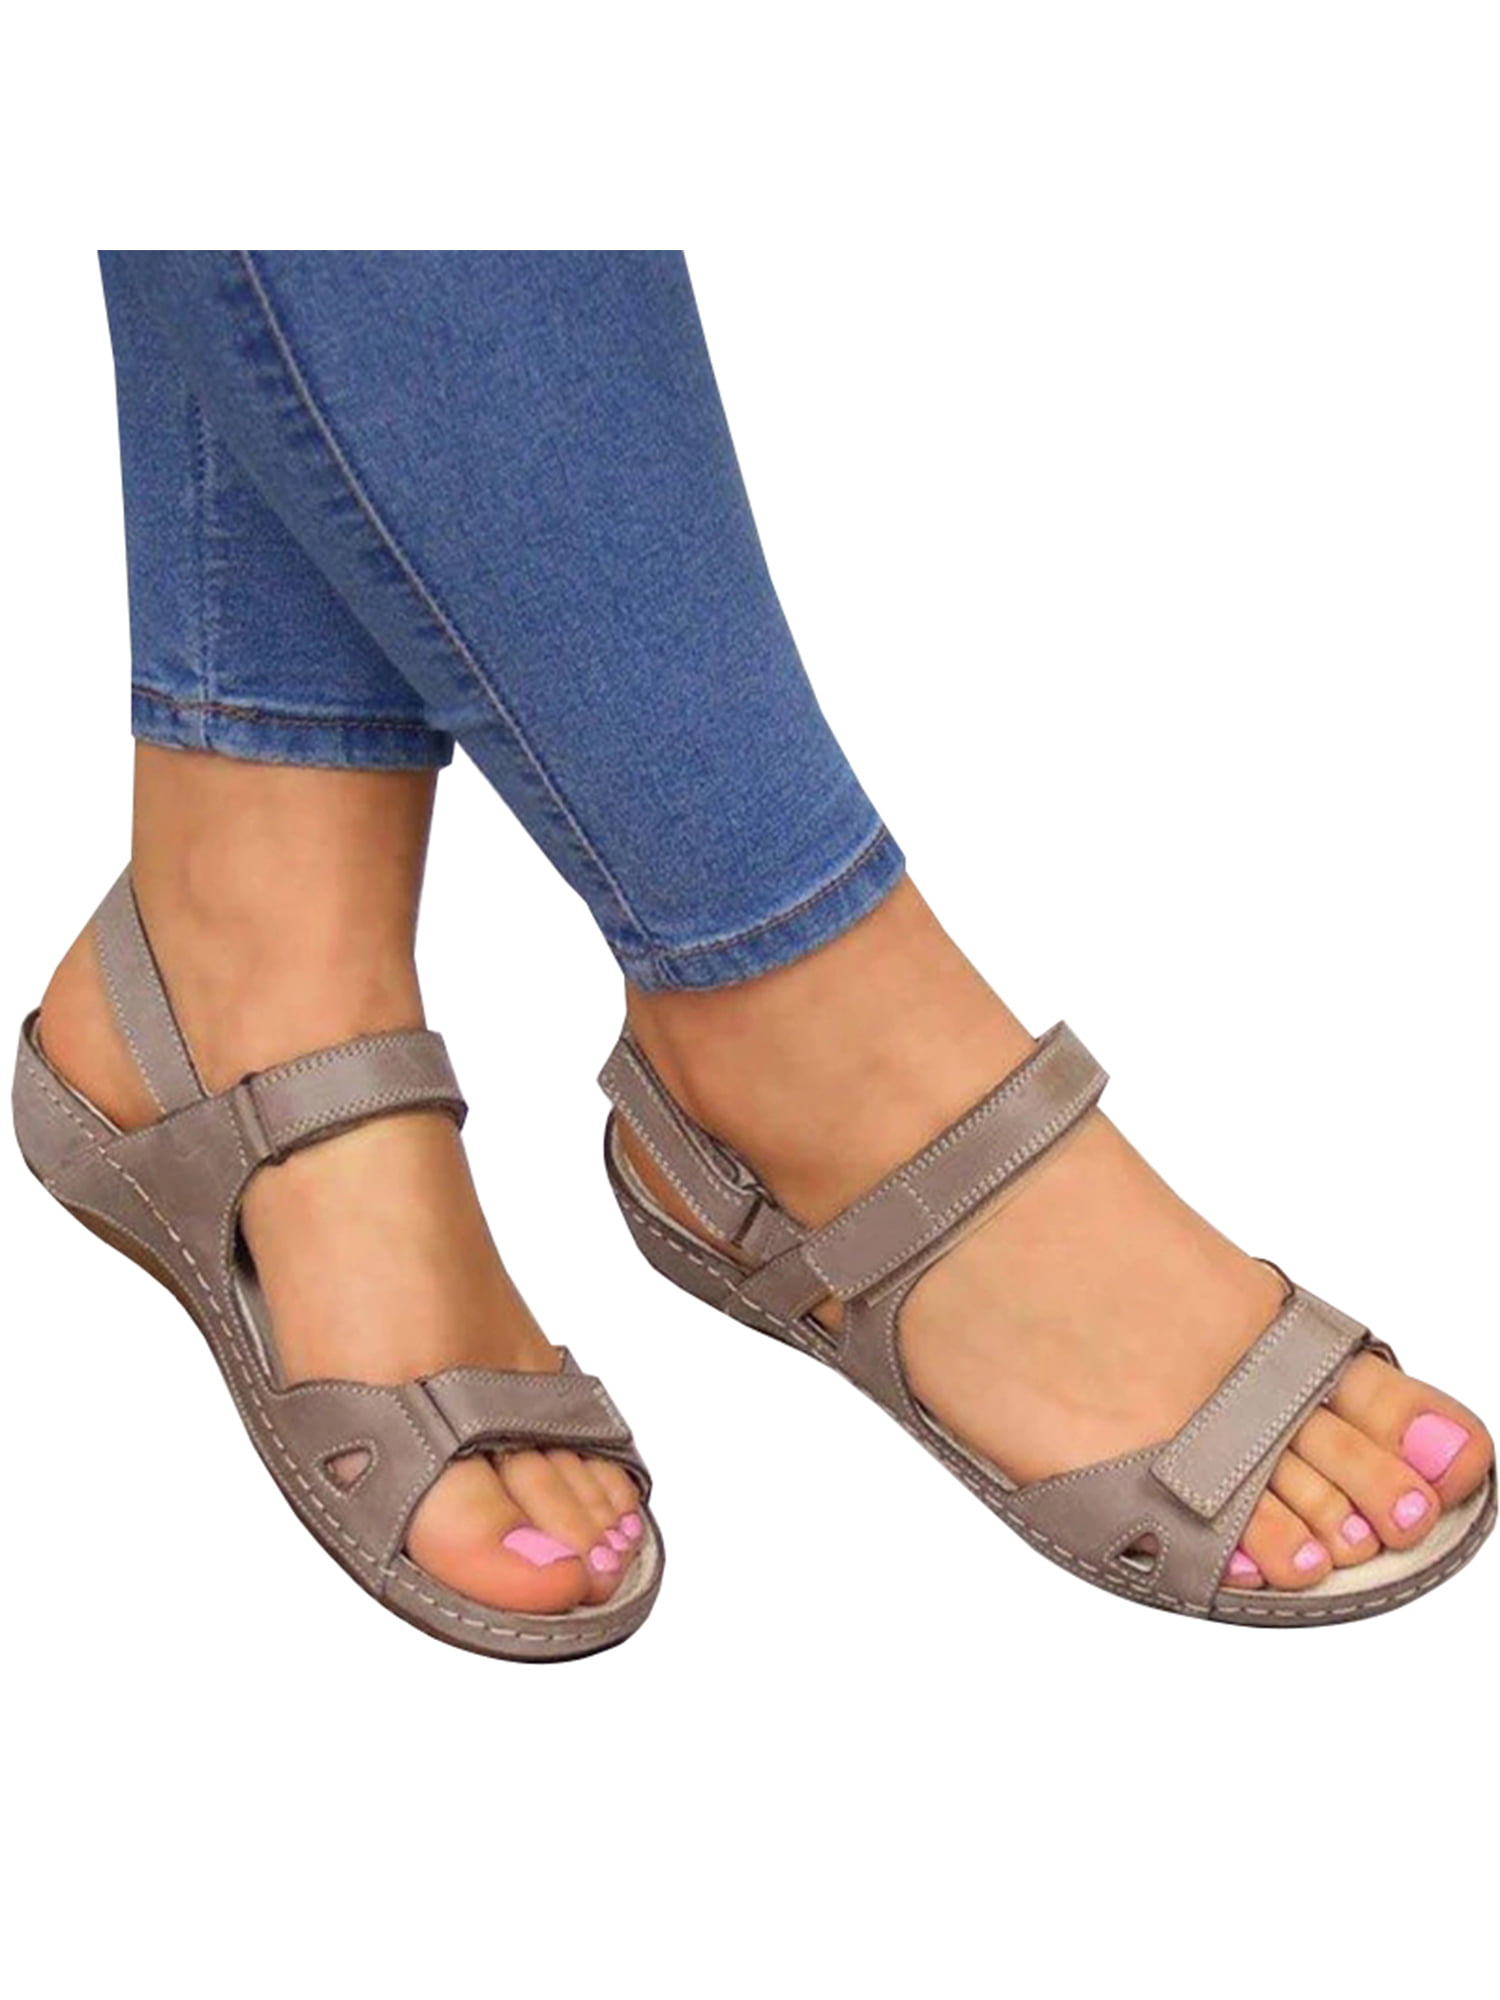 Womens Flats Sandal Summer,Ladies Open Toe Strappy Cross Straps Elastic Comfort Fashion Beach Shoes 